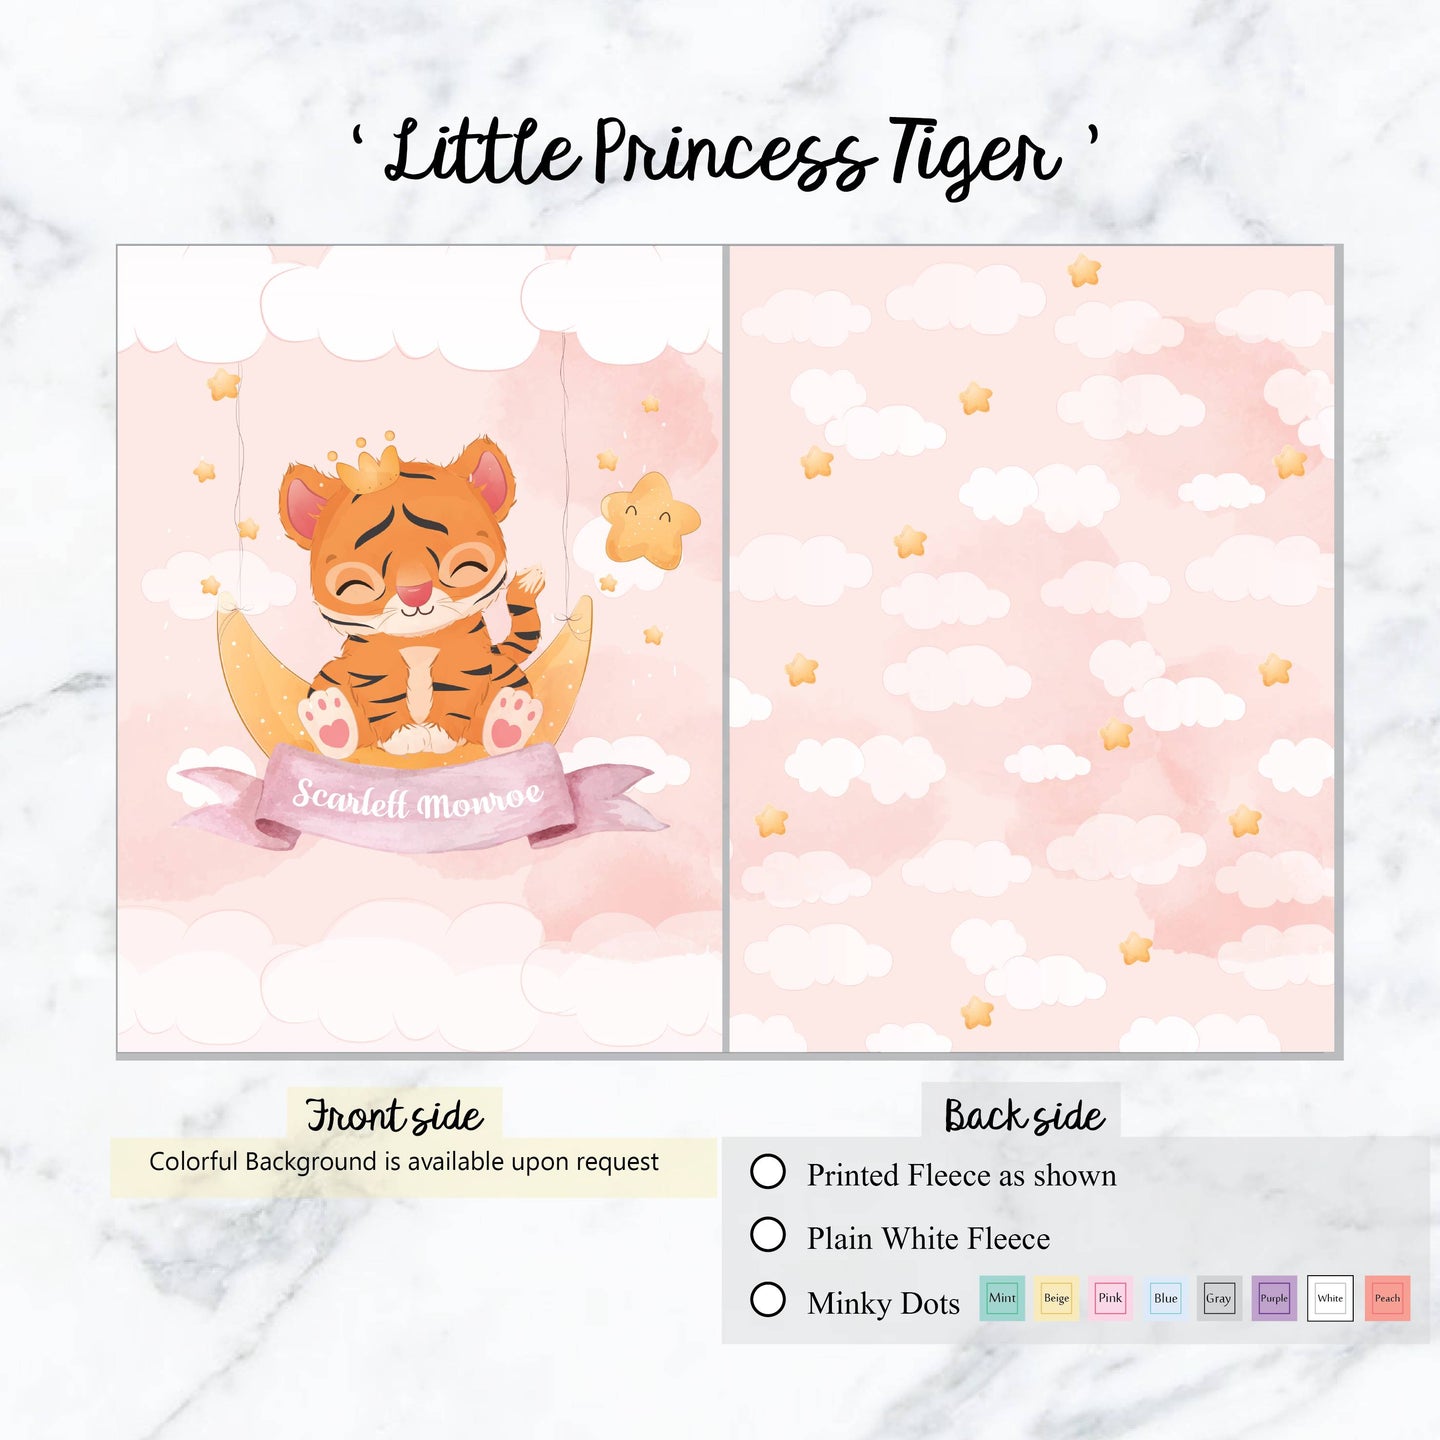 Little Princess Tiger